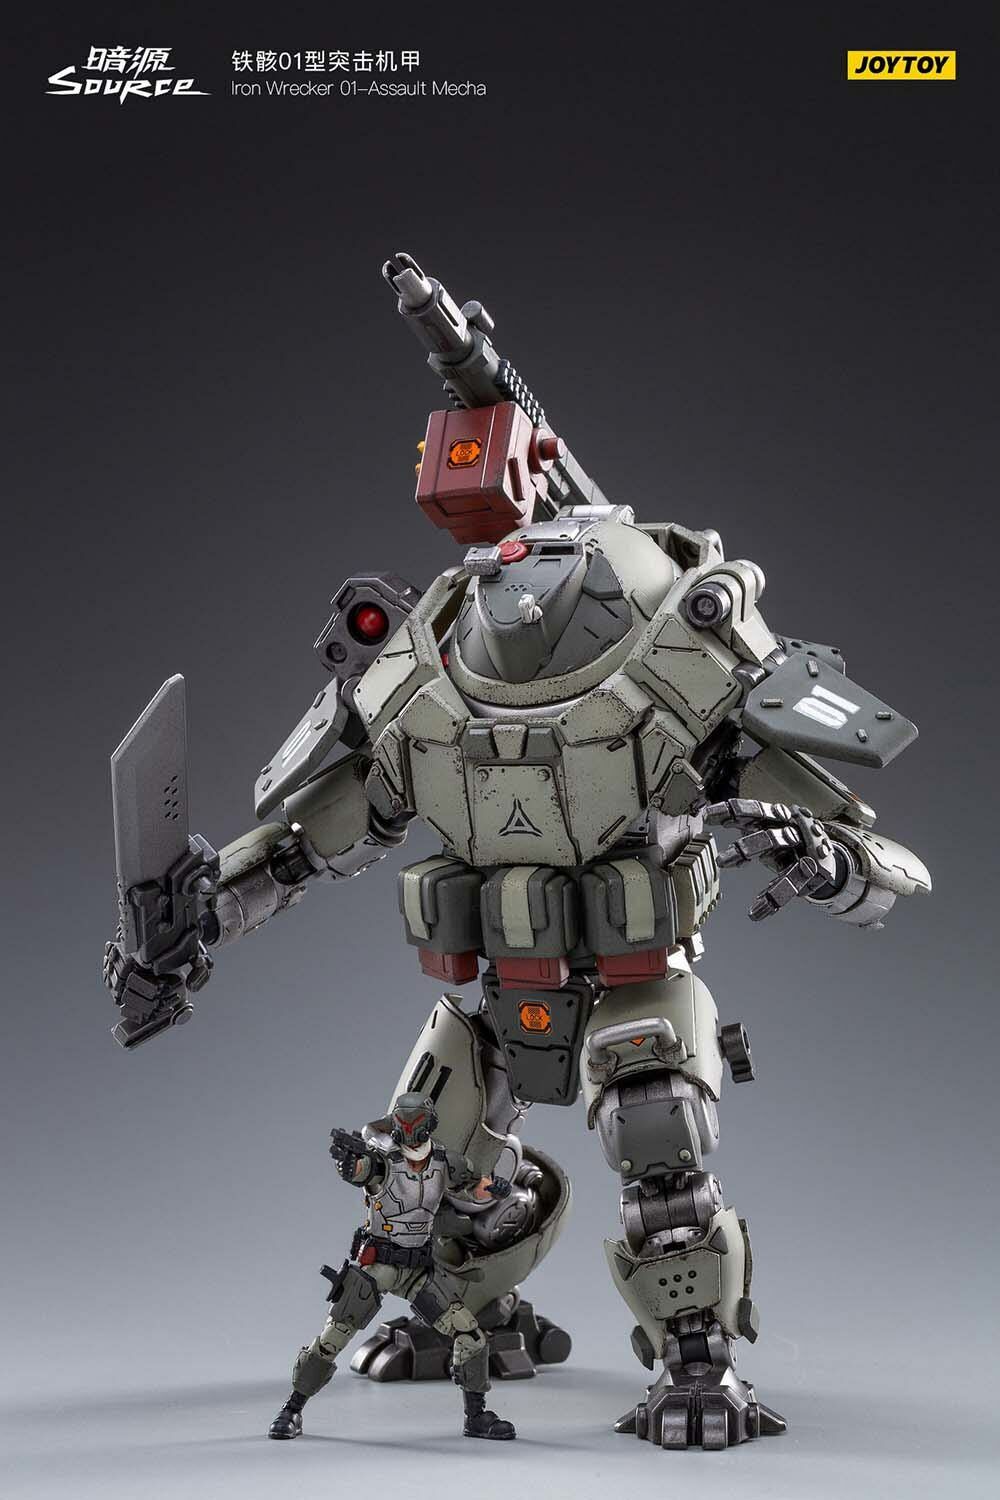 JoyToy Iron Wrecker 01 Urban Assault Mecha 1/25 Robot Action Figure toy in stock